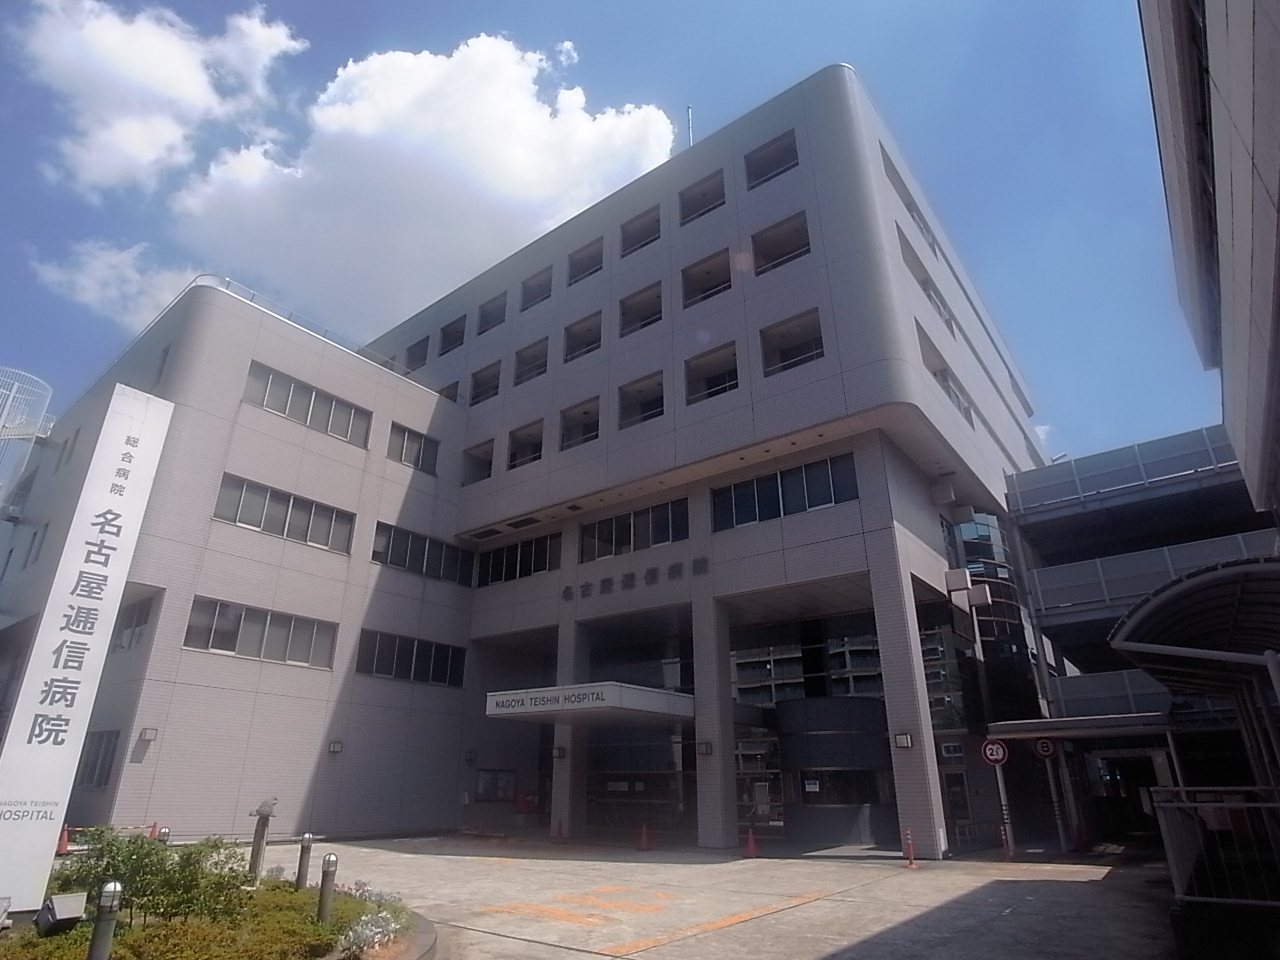 Hospital. 160m to Nagoya the Communications Hospital (General Hospital) (hospital)